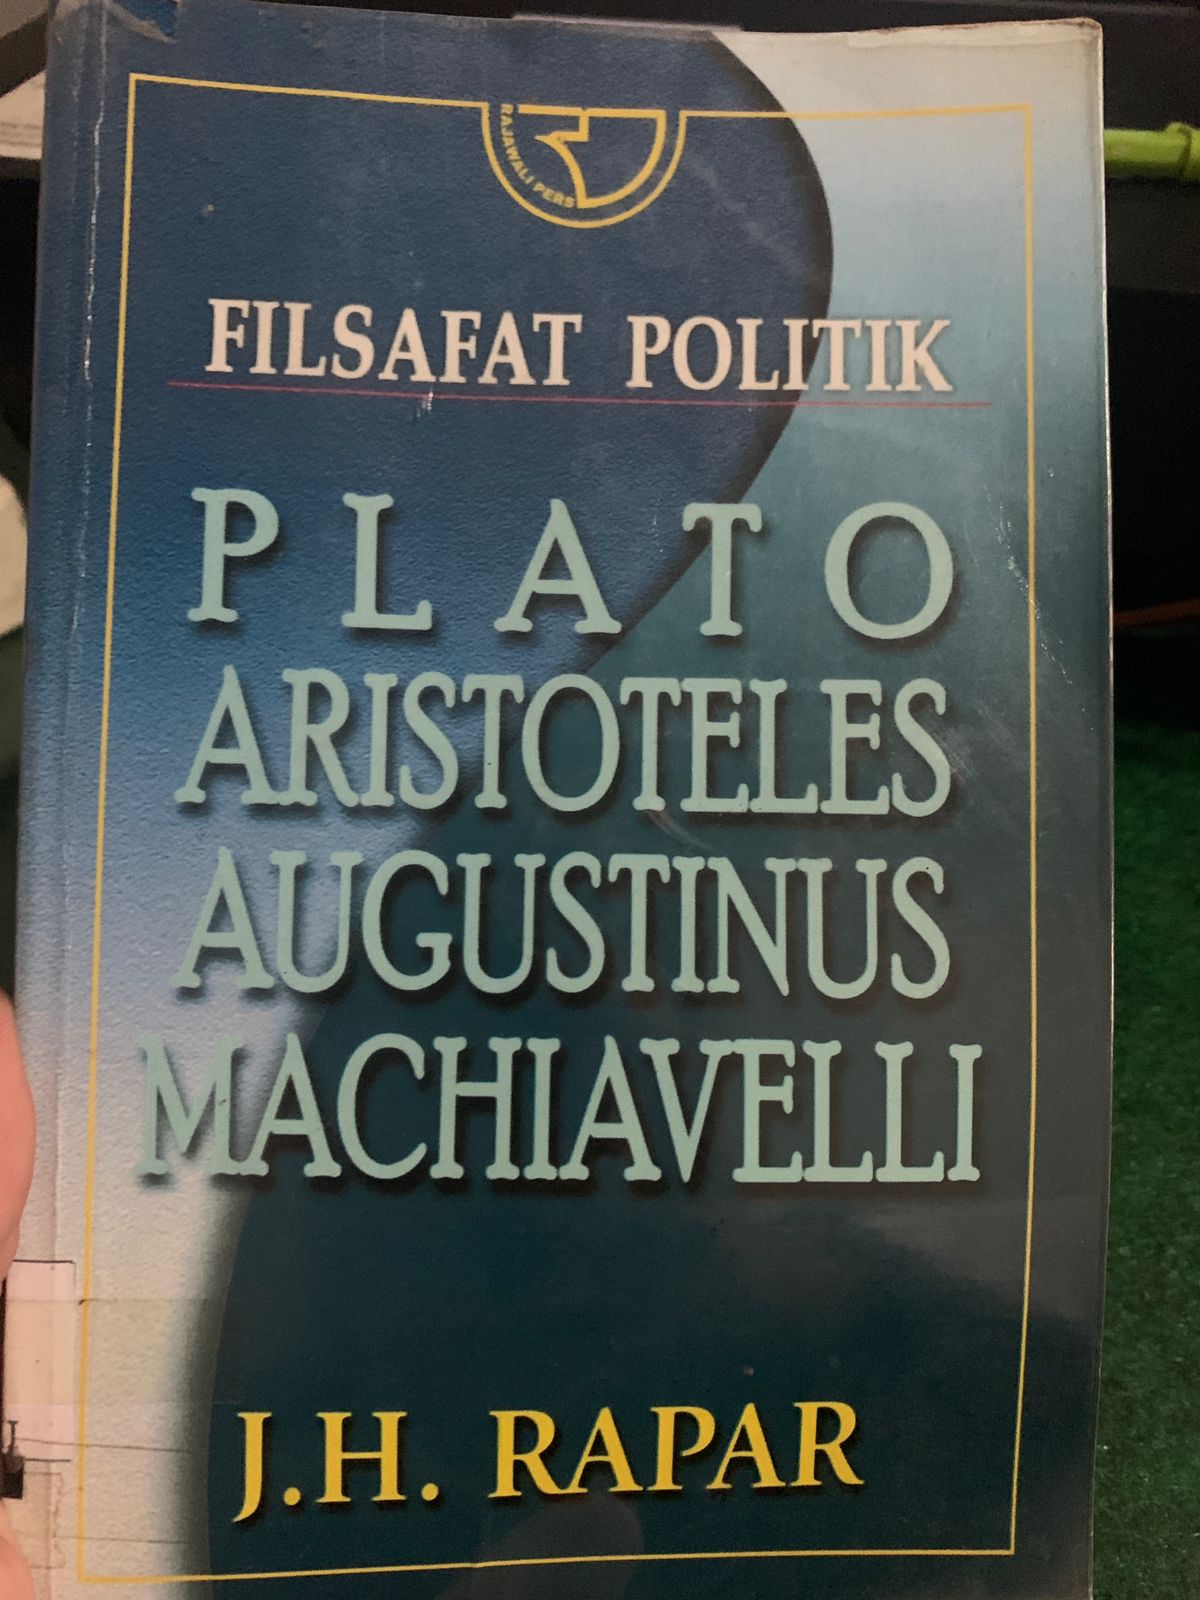 FILSAFAT POLITIK PLATO ARISTOTELES AUGUSTINUS MACHIAVELLI